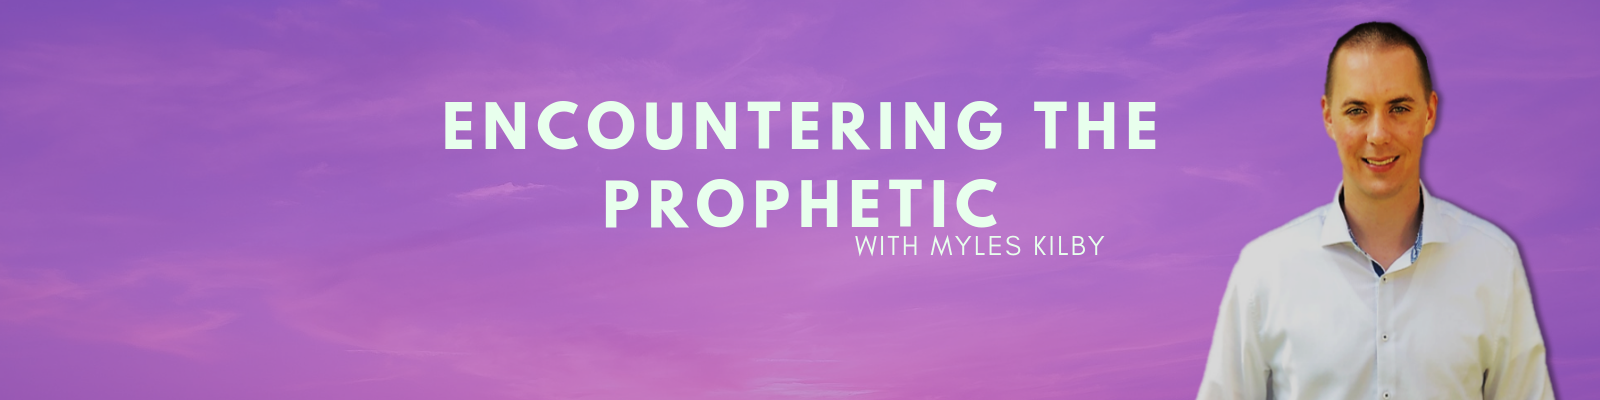 Encountering the Prophetic with Myles Kilby